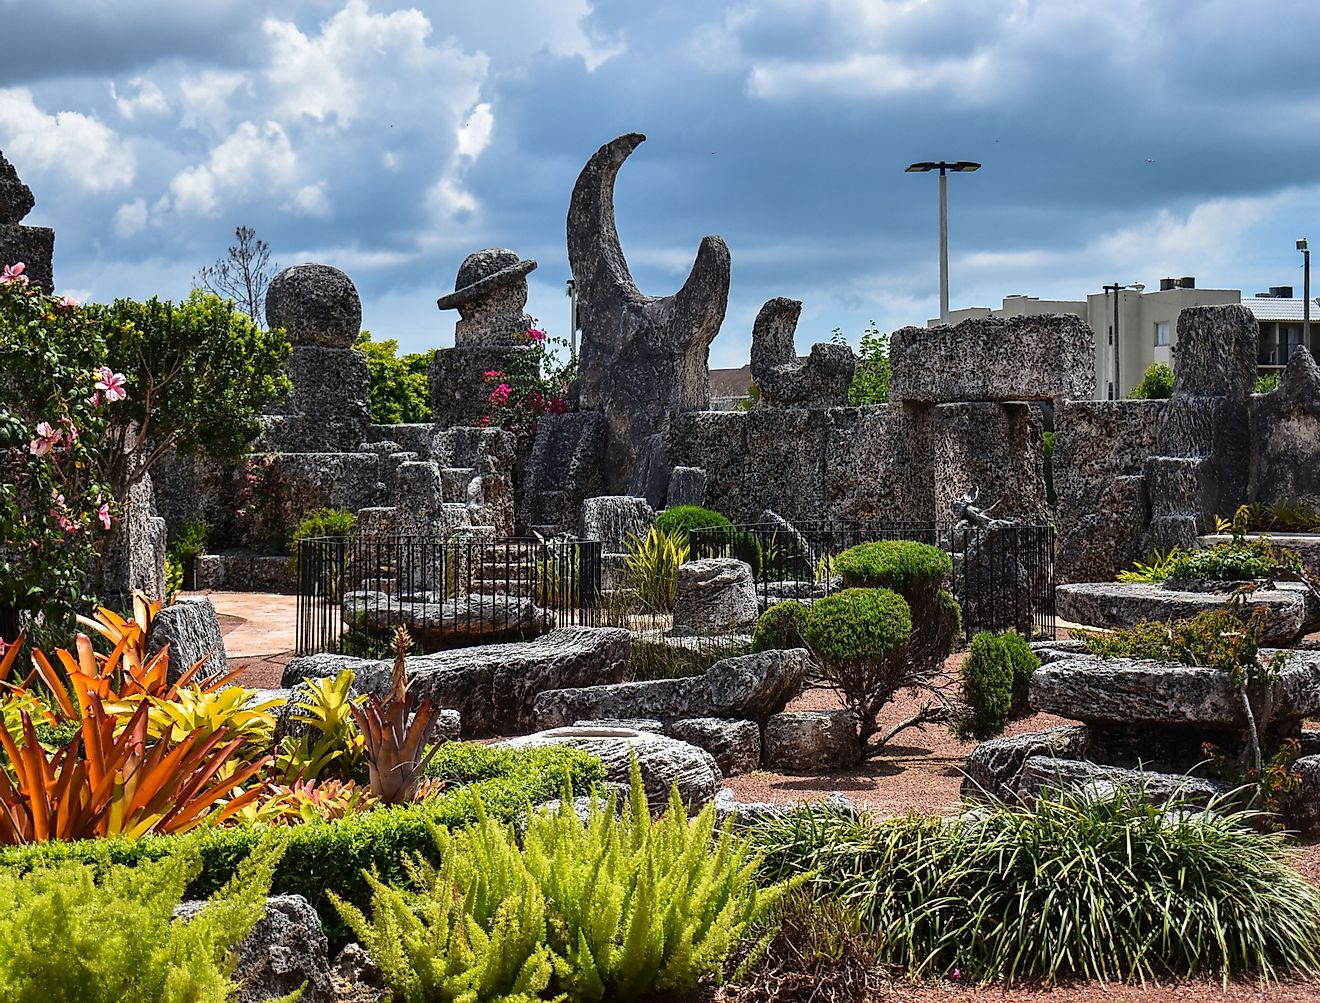 Homestead, FL. Coral Castle courtyard view. Image credit Amanda Reyes via shutterstock